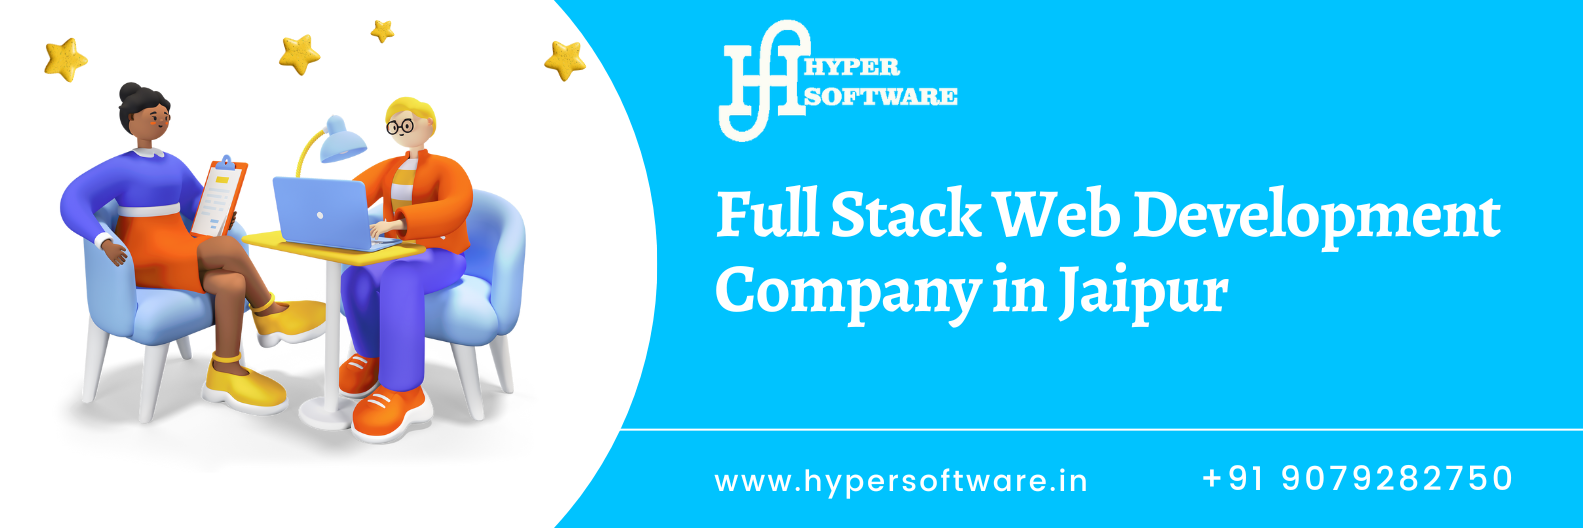 Full Stack Web Development Company